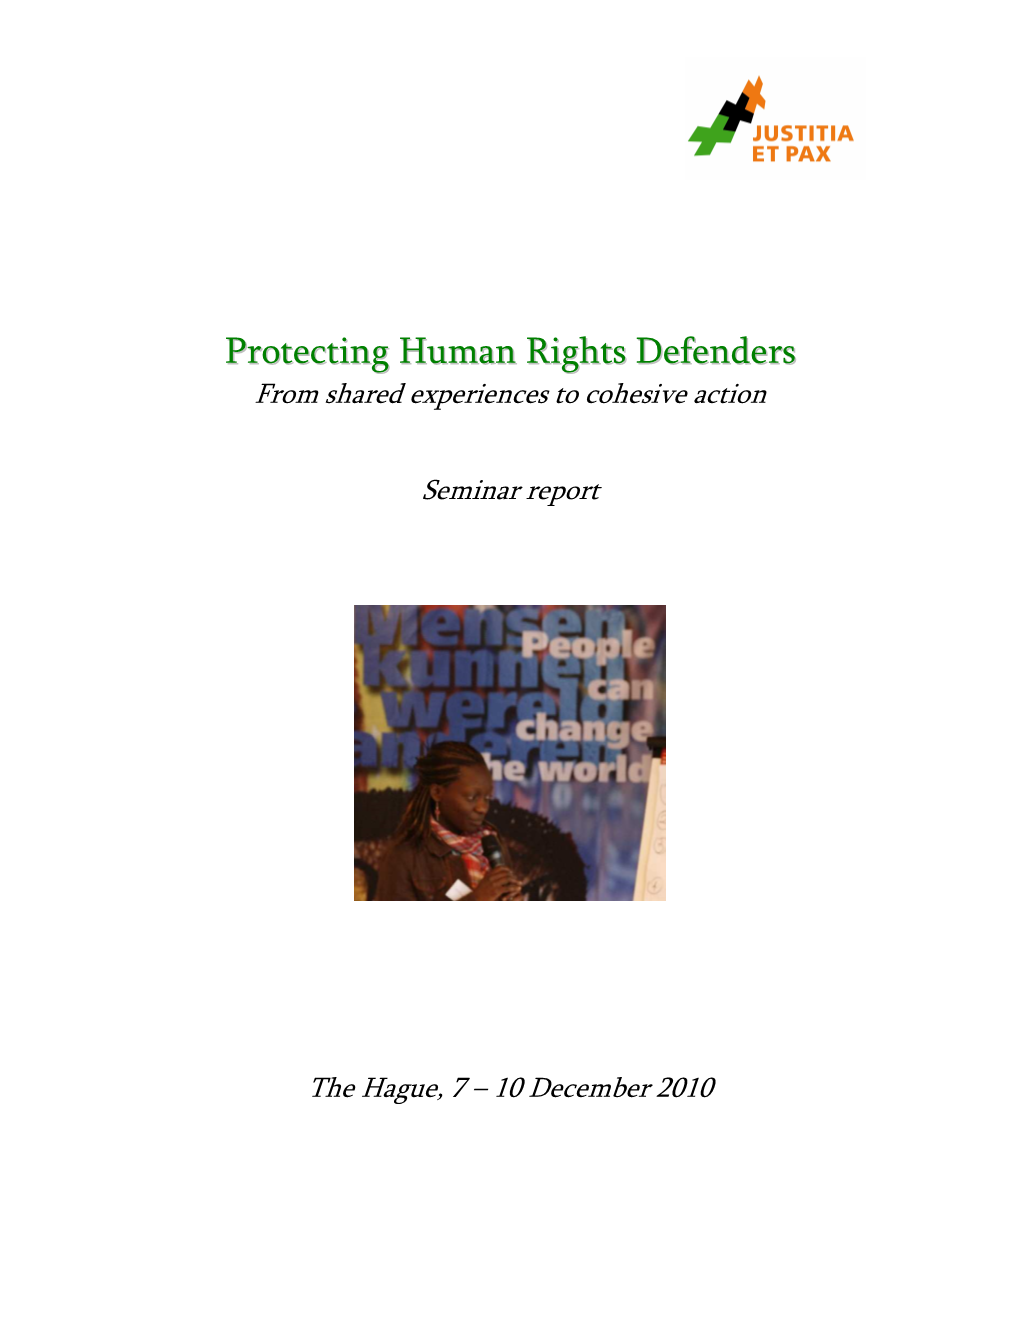 Protecting Human Rights Defenders Seminar Report